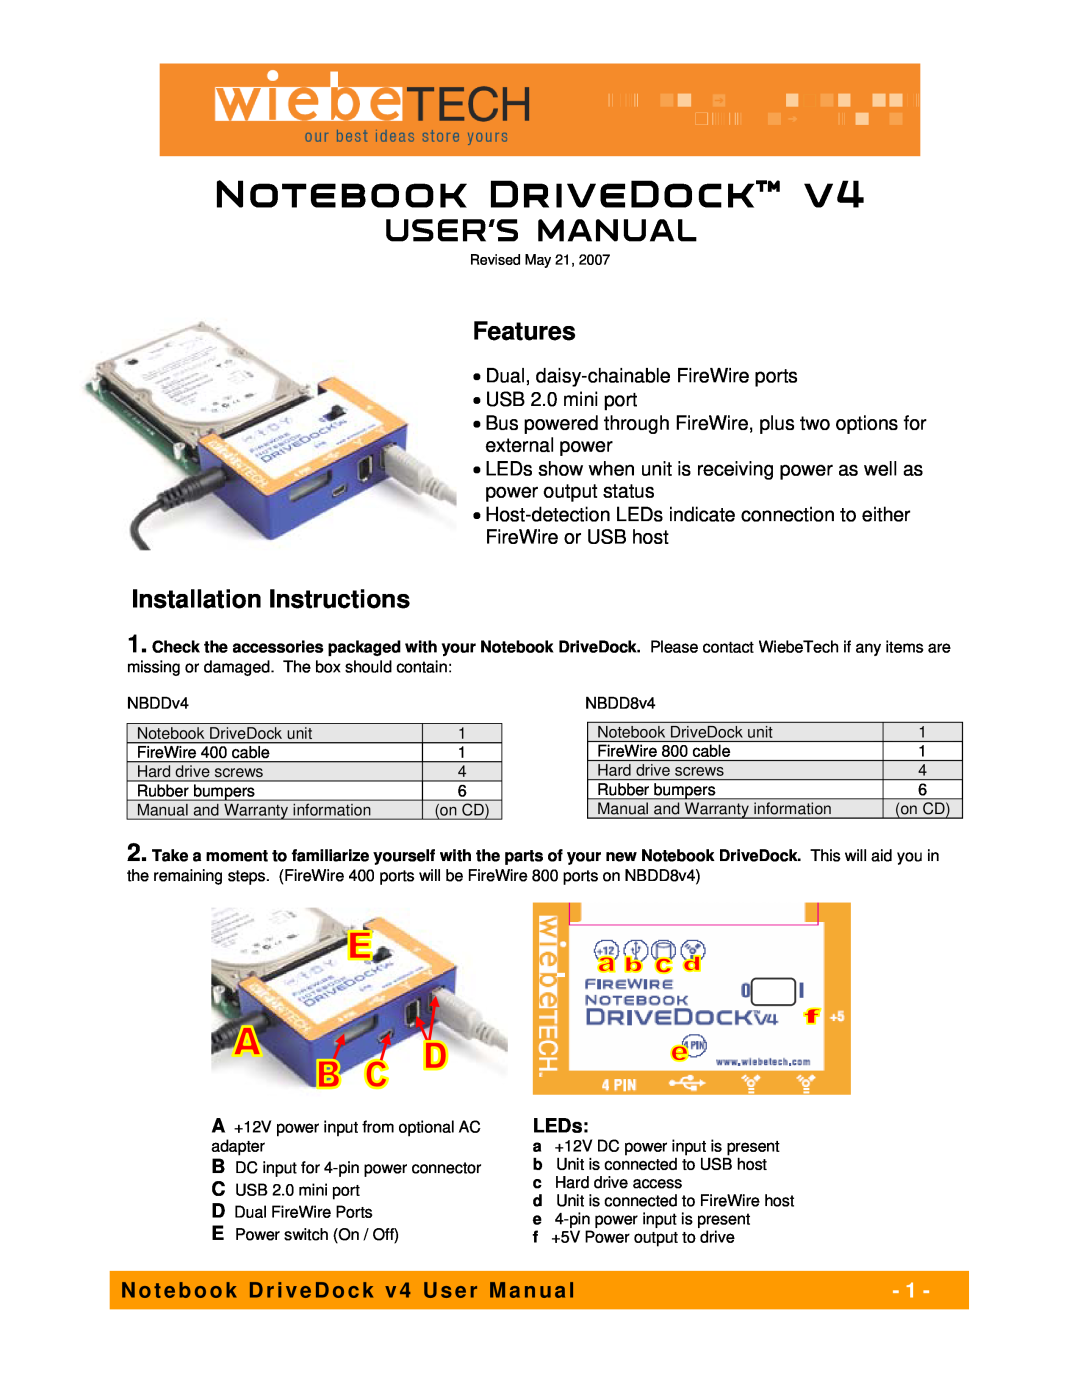 WiebeTech NBDDV4 user manual Features, Installation Instructions, Notebook DriveDock, LEDs 